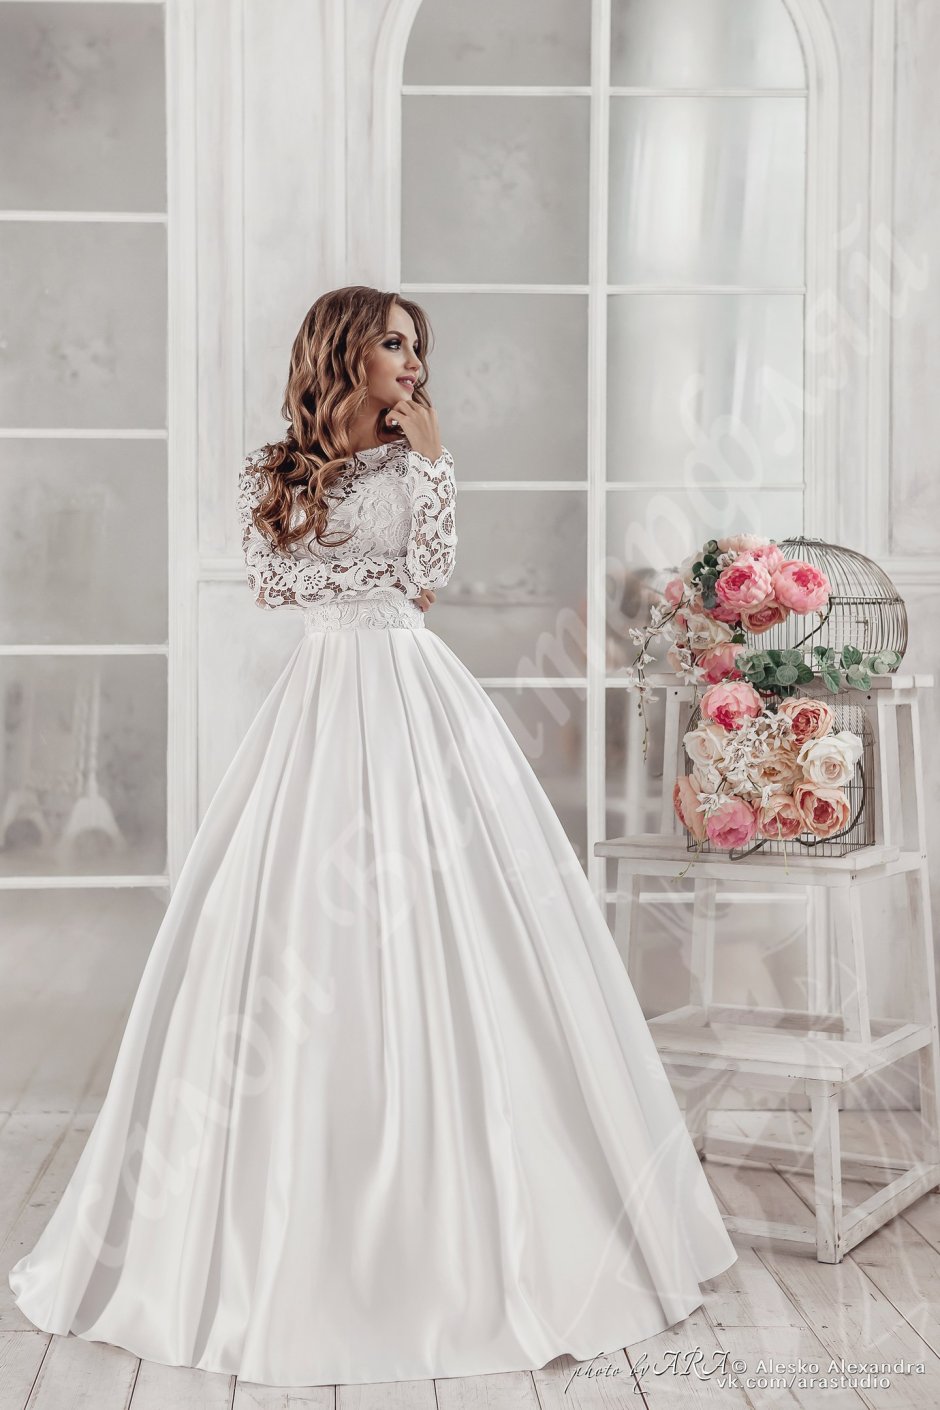 Wedding Gown платья Свадебные